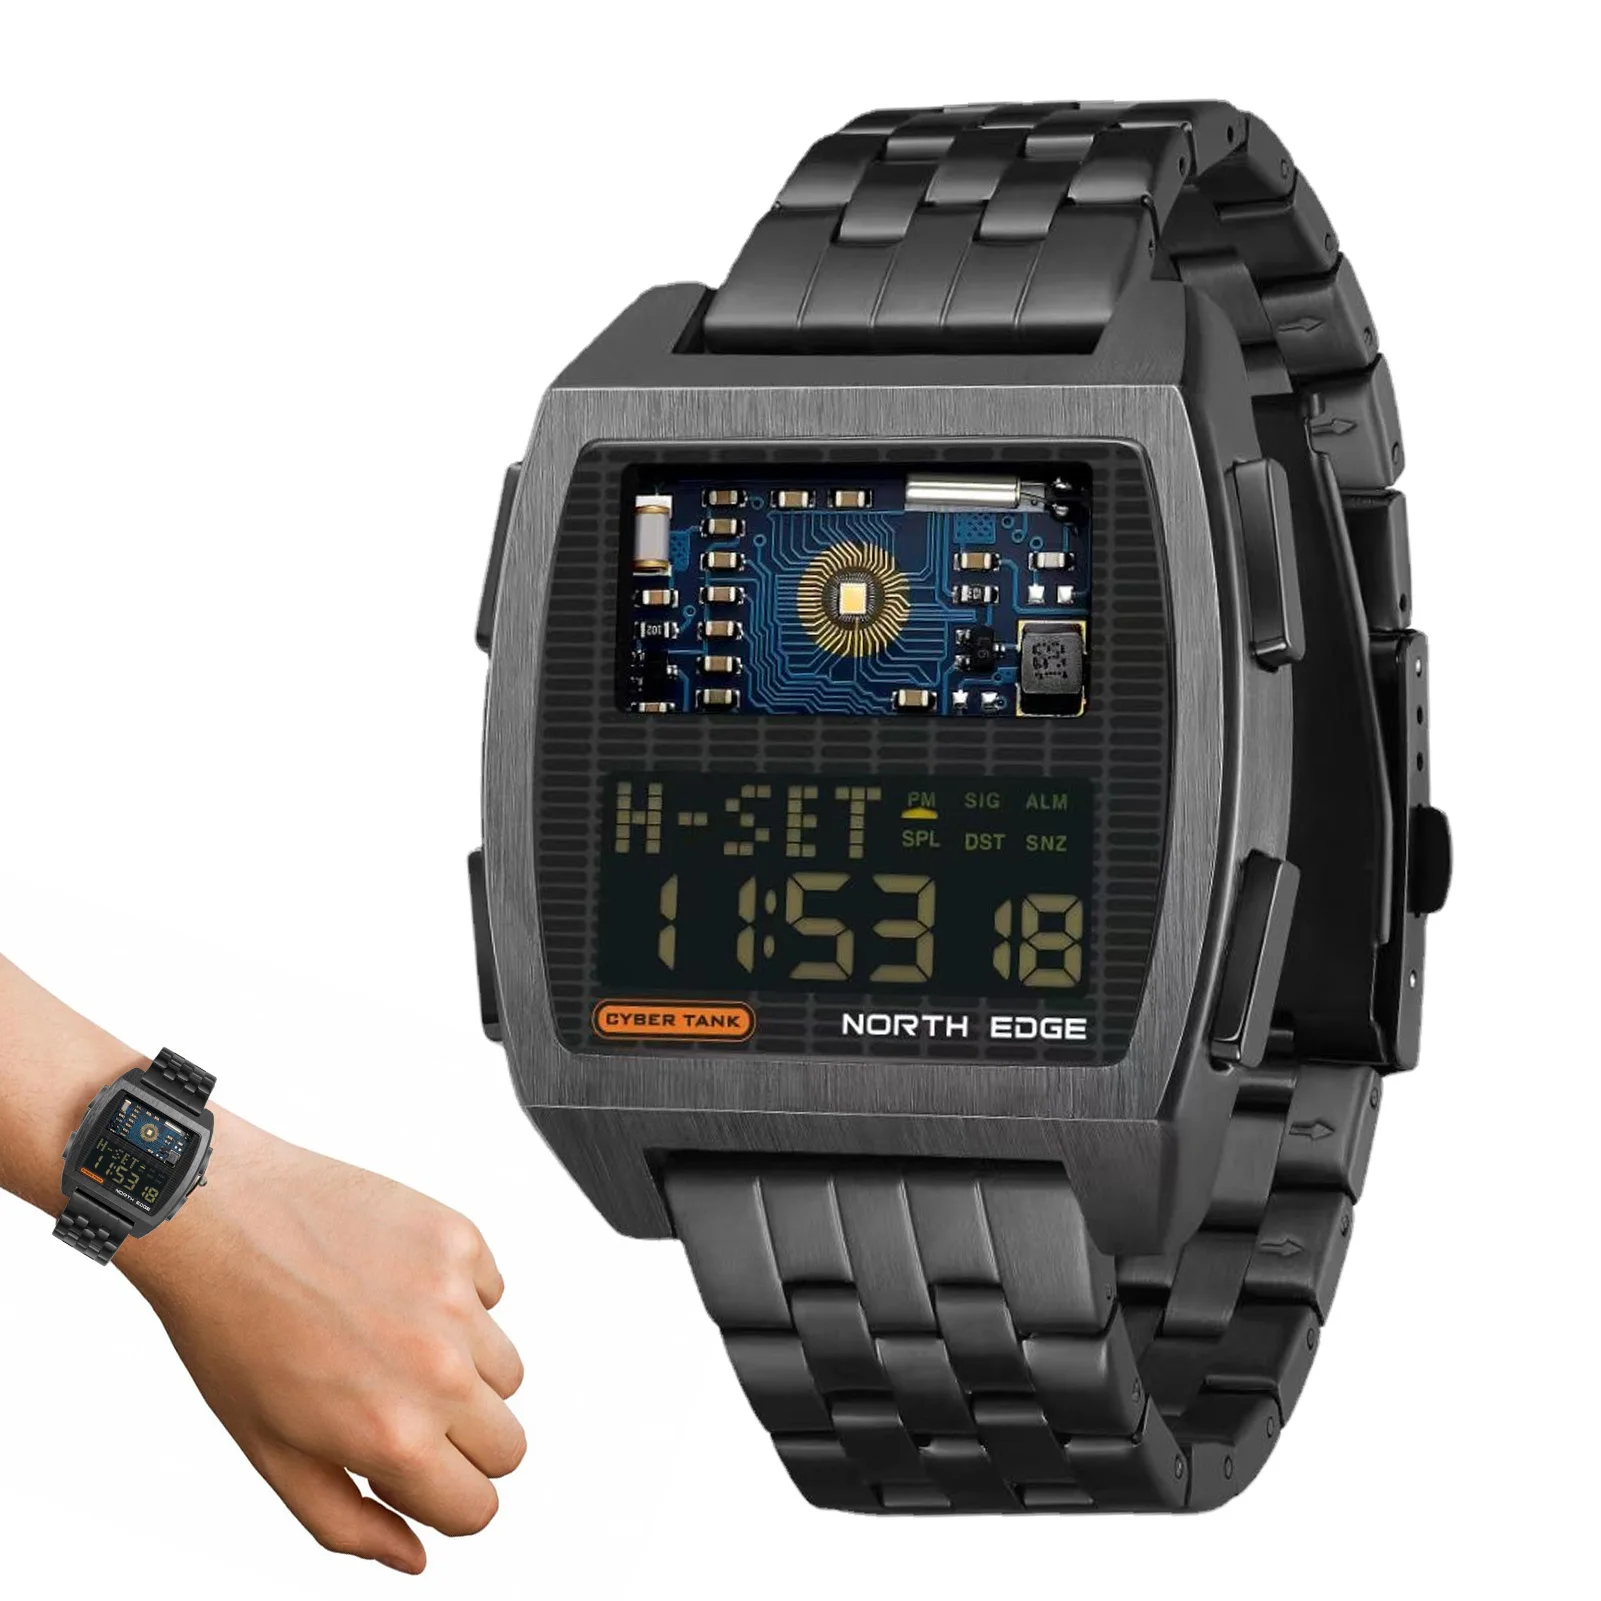 

Digital Wrist Watch Men Digital Watch With Stainless Steel Wristband 50M/164FT Waterproof Outdoor Digital Smart Watch